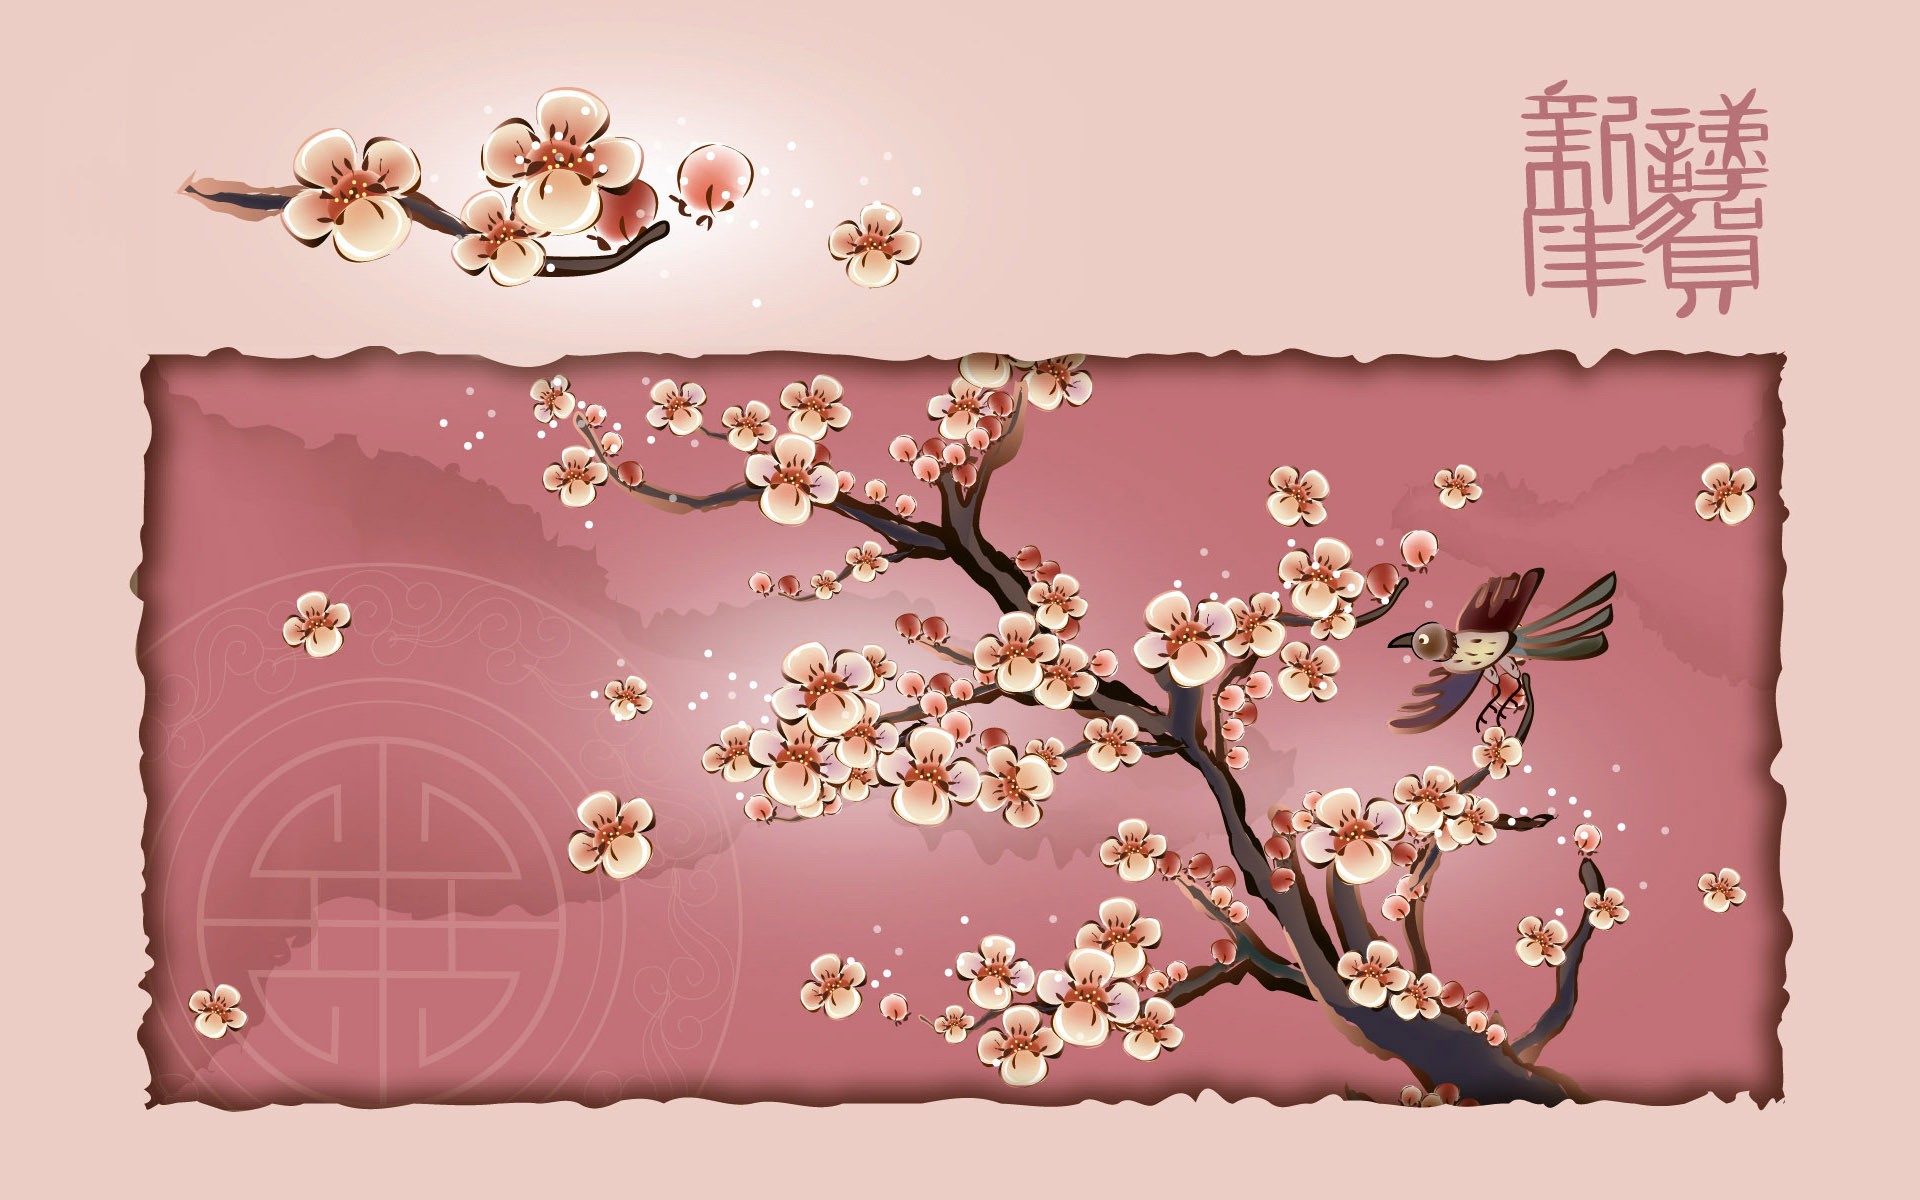 Artistic Oriental Wallpaper Image